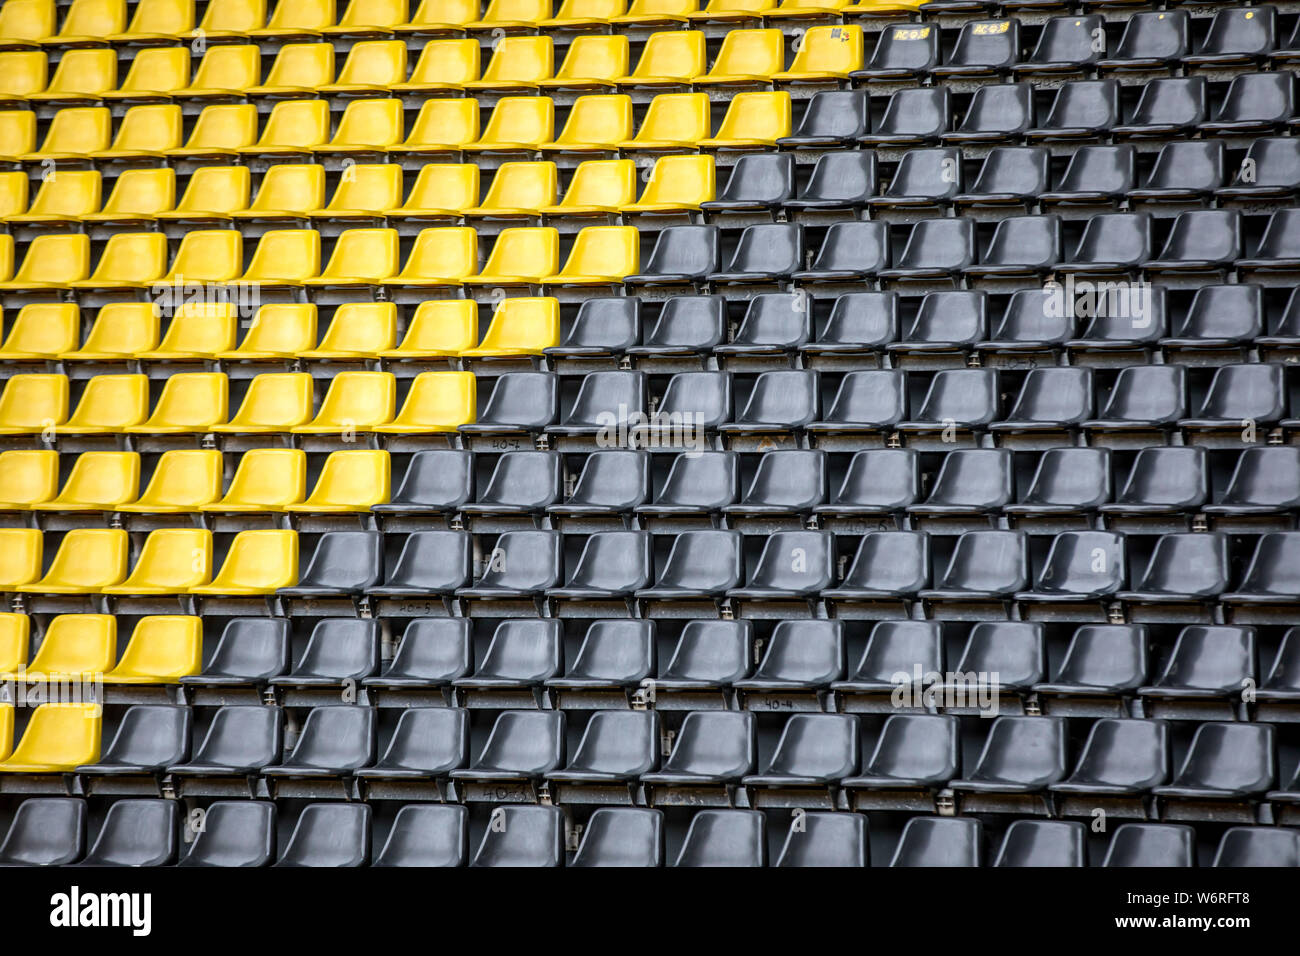 Signal-Iduna-Park, Westfalenstadion, football stadium of BVB Borussia Dortmund, spectator seats in black-yellow club colours, Stock Photo